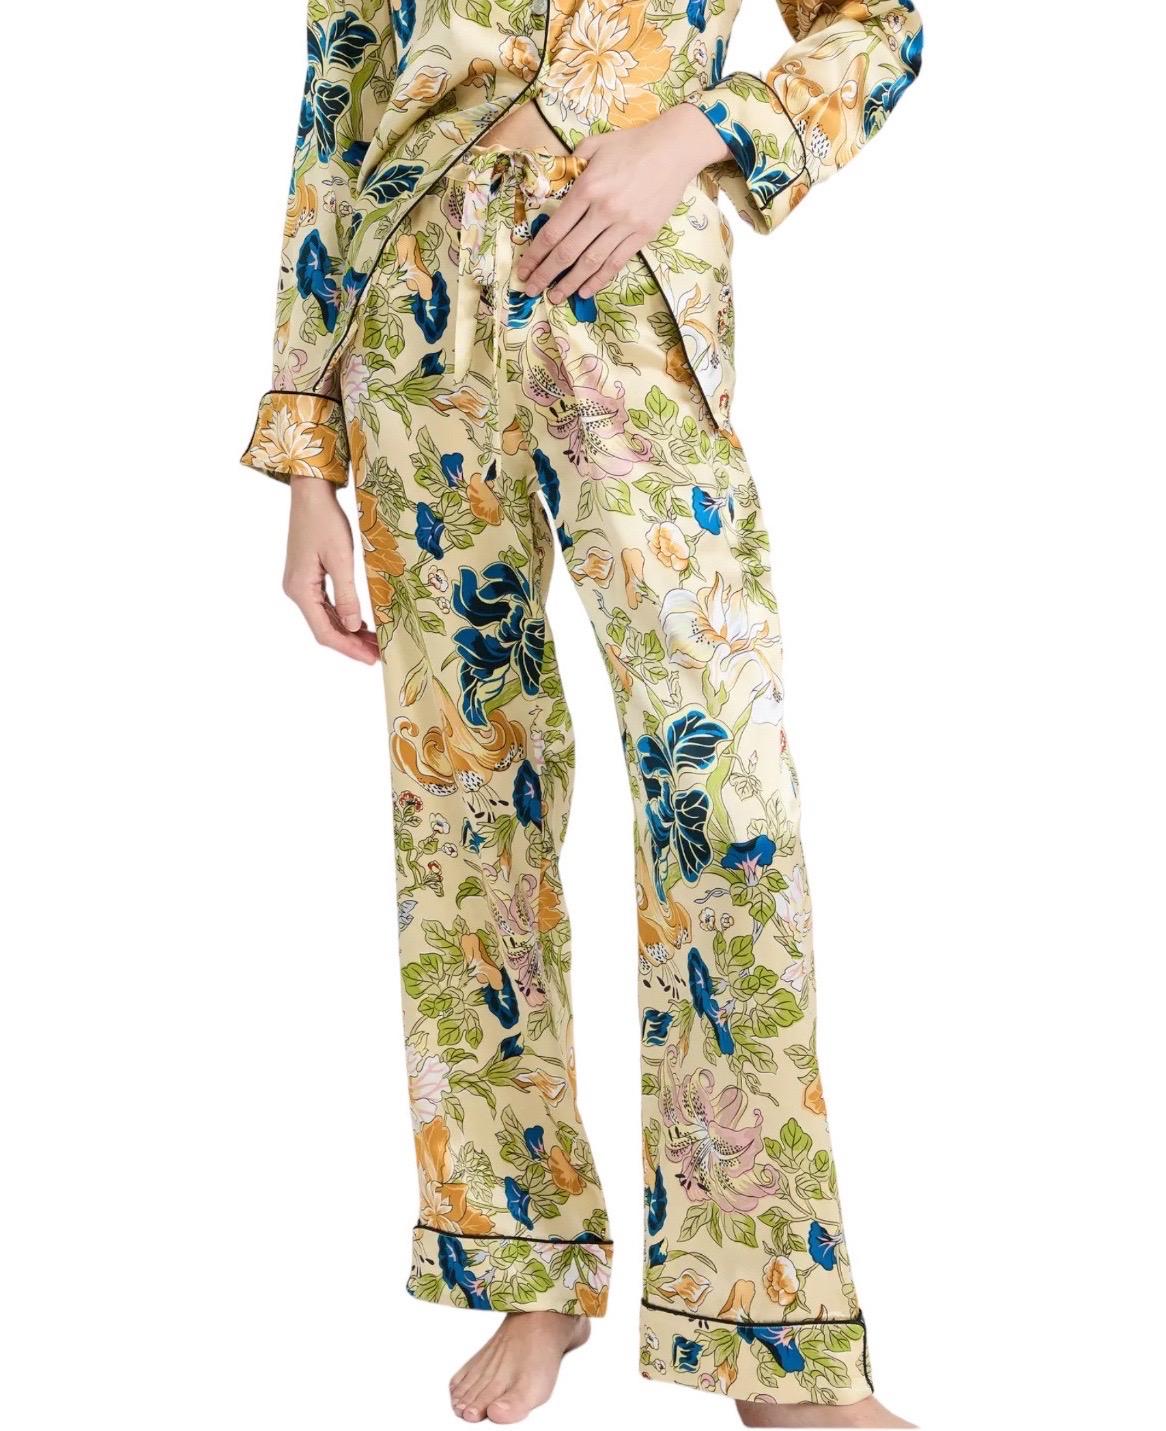 NEW Olivia Von Halle Silk Floral Print Pajamas Lounge Home Sleep Wear Suit M For Sale 2